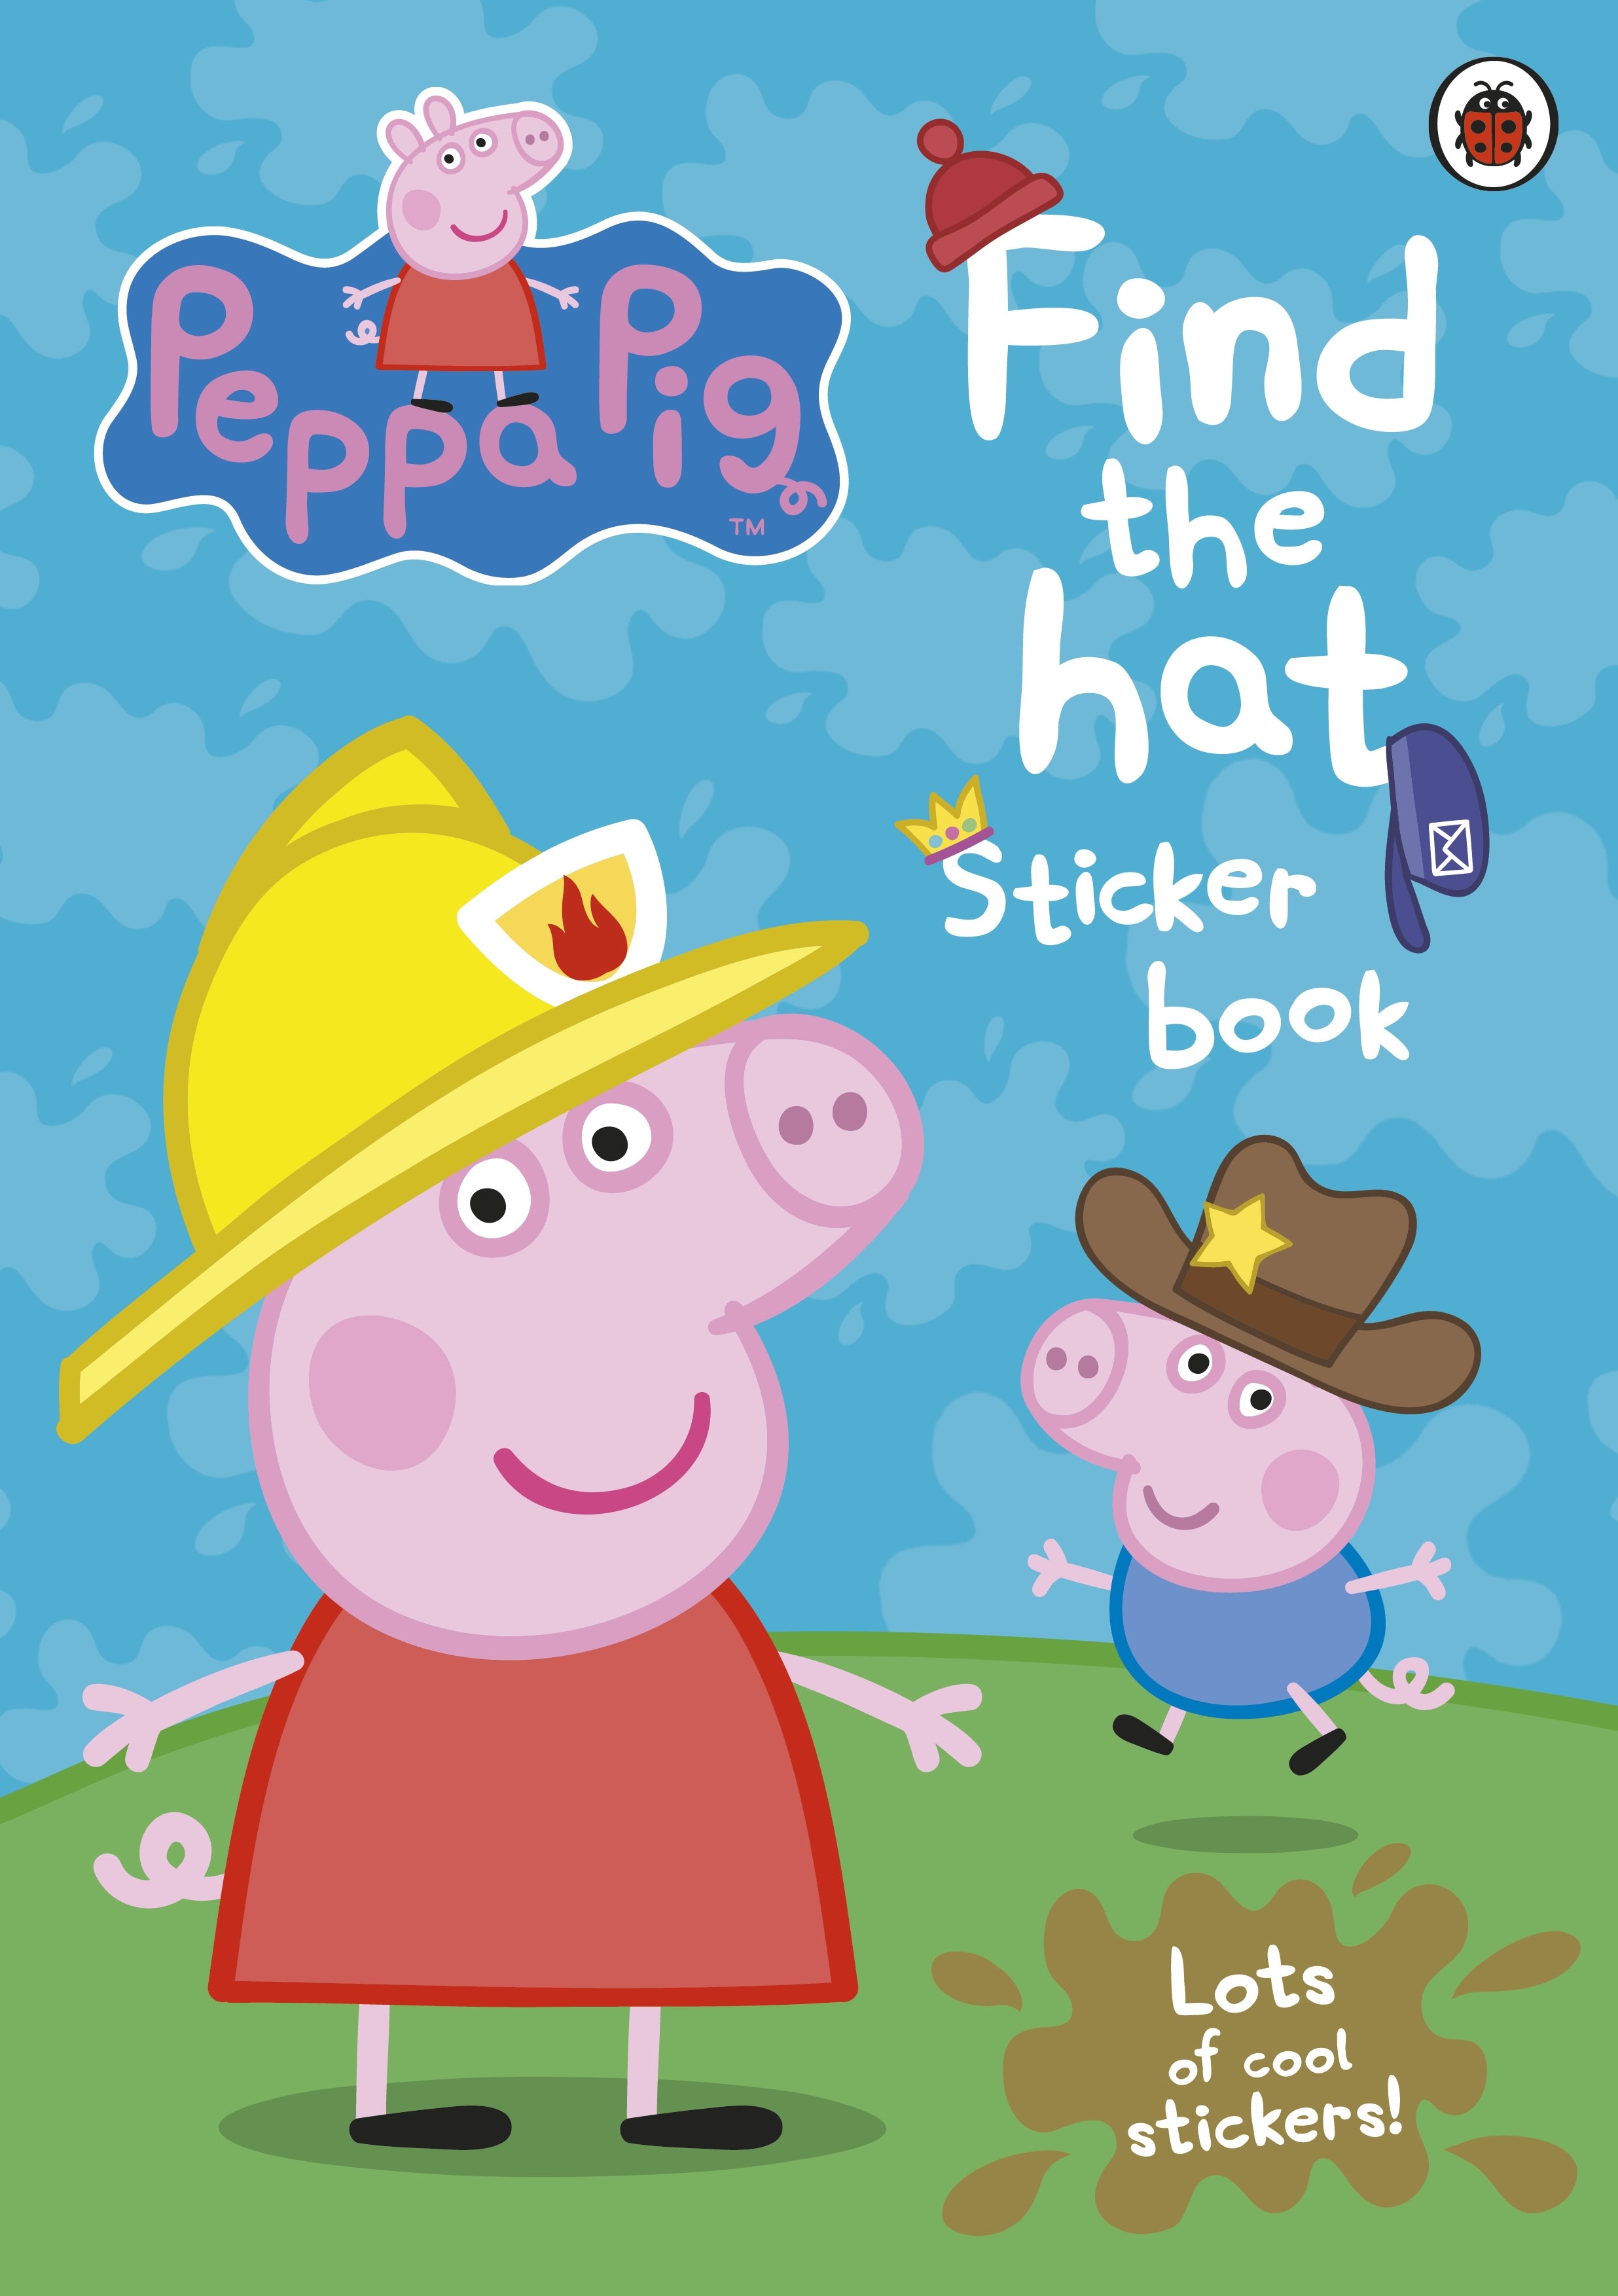 Book “Peppa Pig: Find the Hat Sticker Book” by Peppa Pig — July 7, 2011